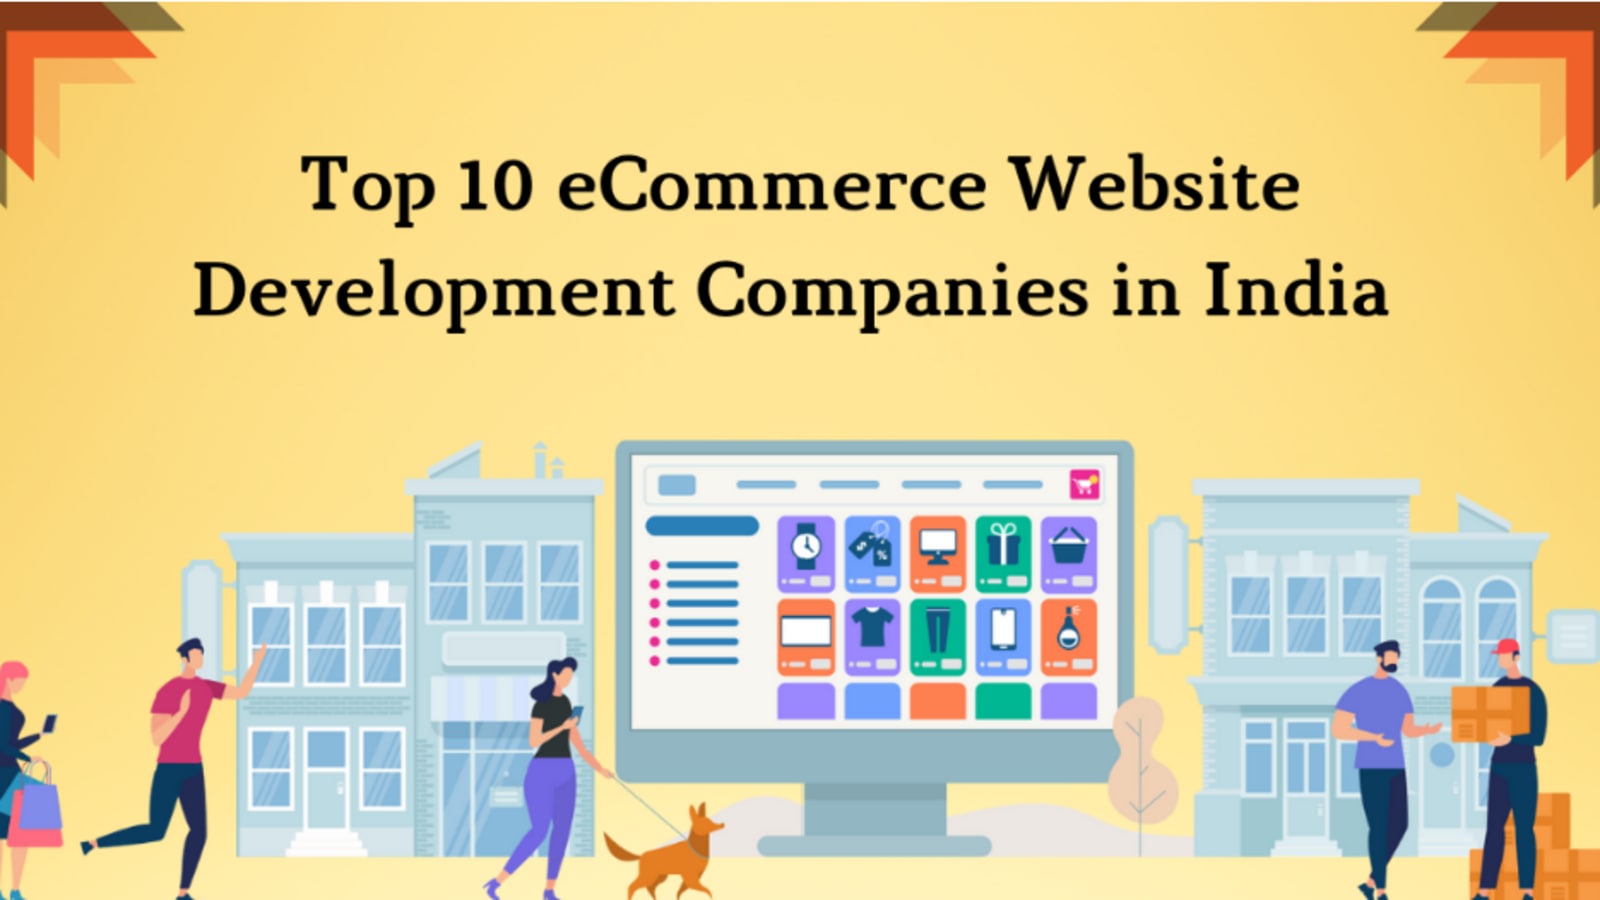 Top 10 eCommerce Website Development Companies in India - Hindustan Times